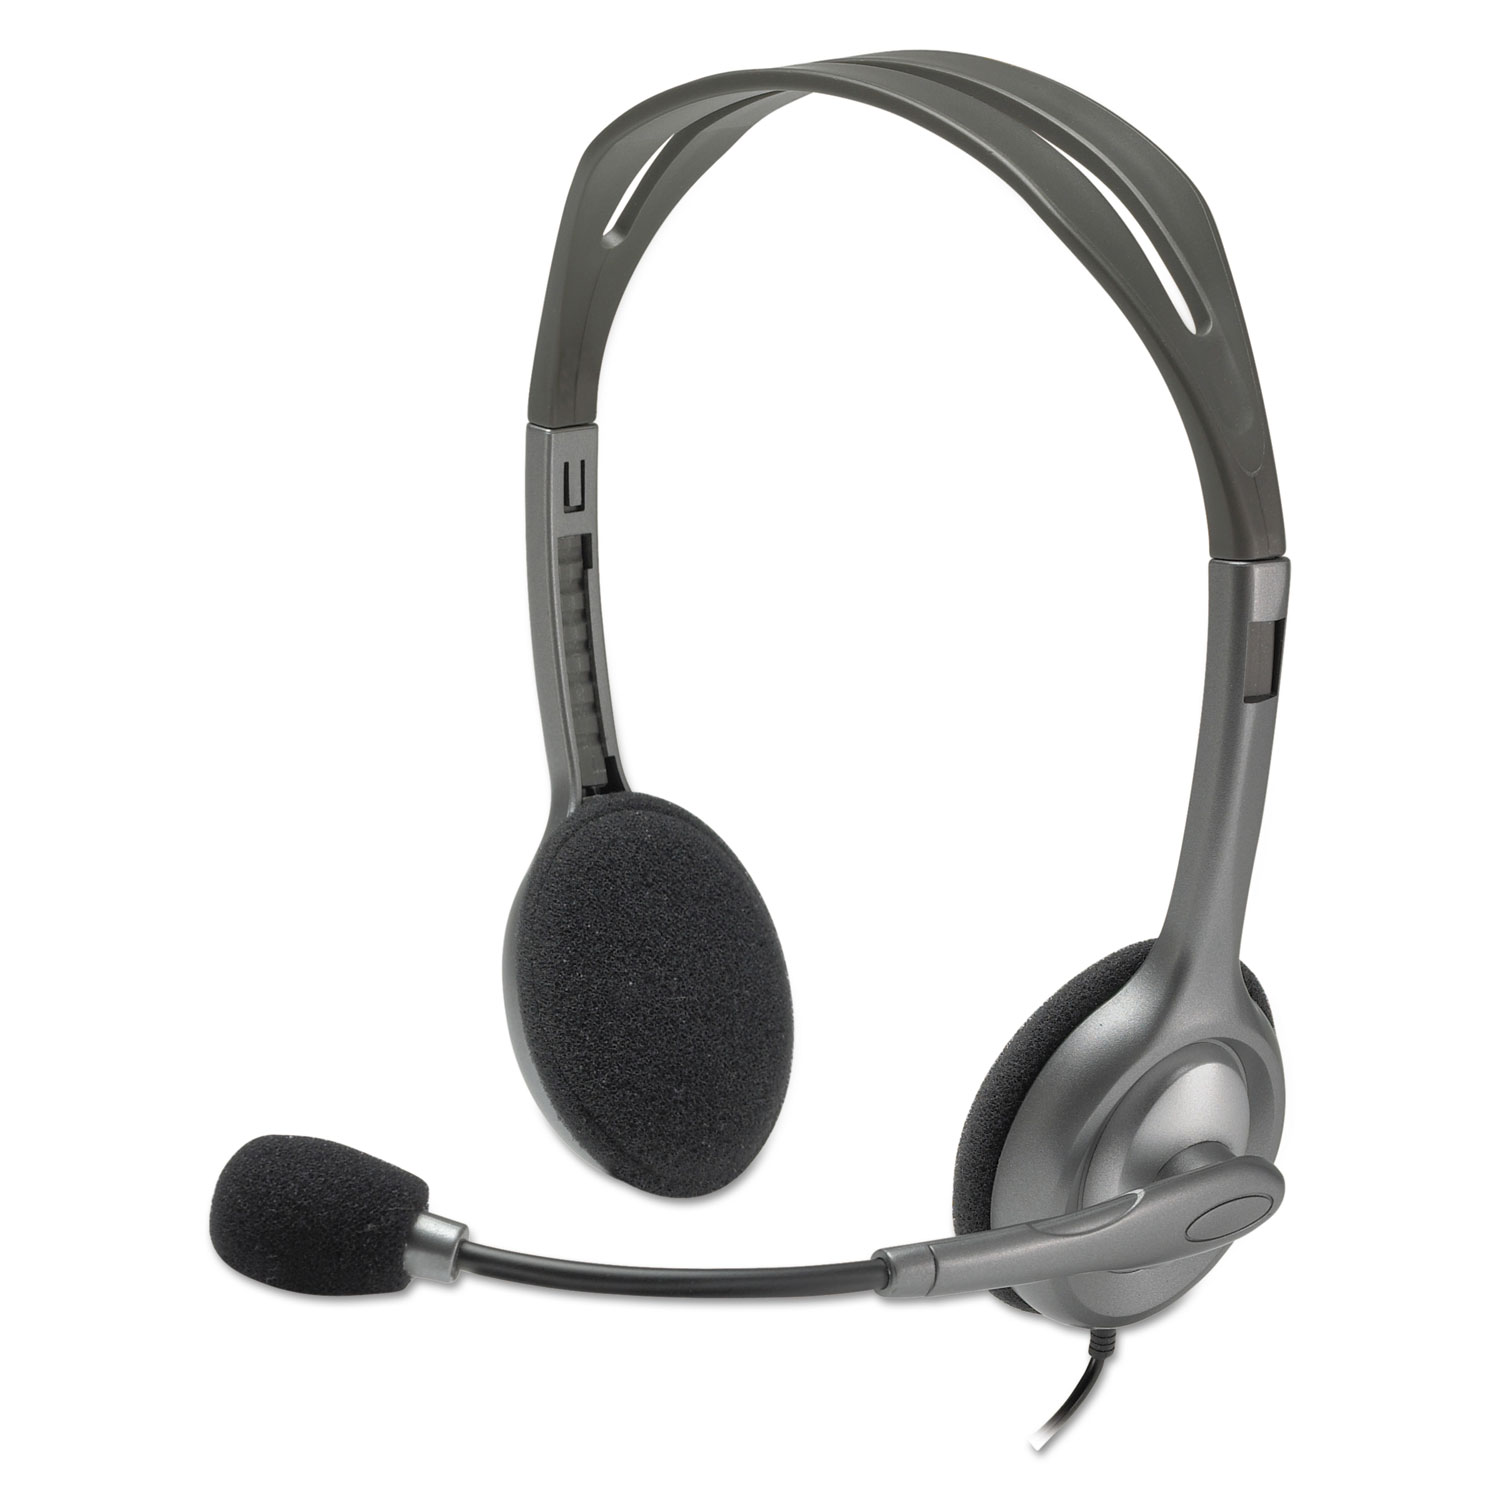  Logitech 981-000612 H111 Binaural Over-the-Head, Stereo Headset, Black/Silver (LOG981000612) 